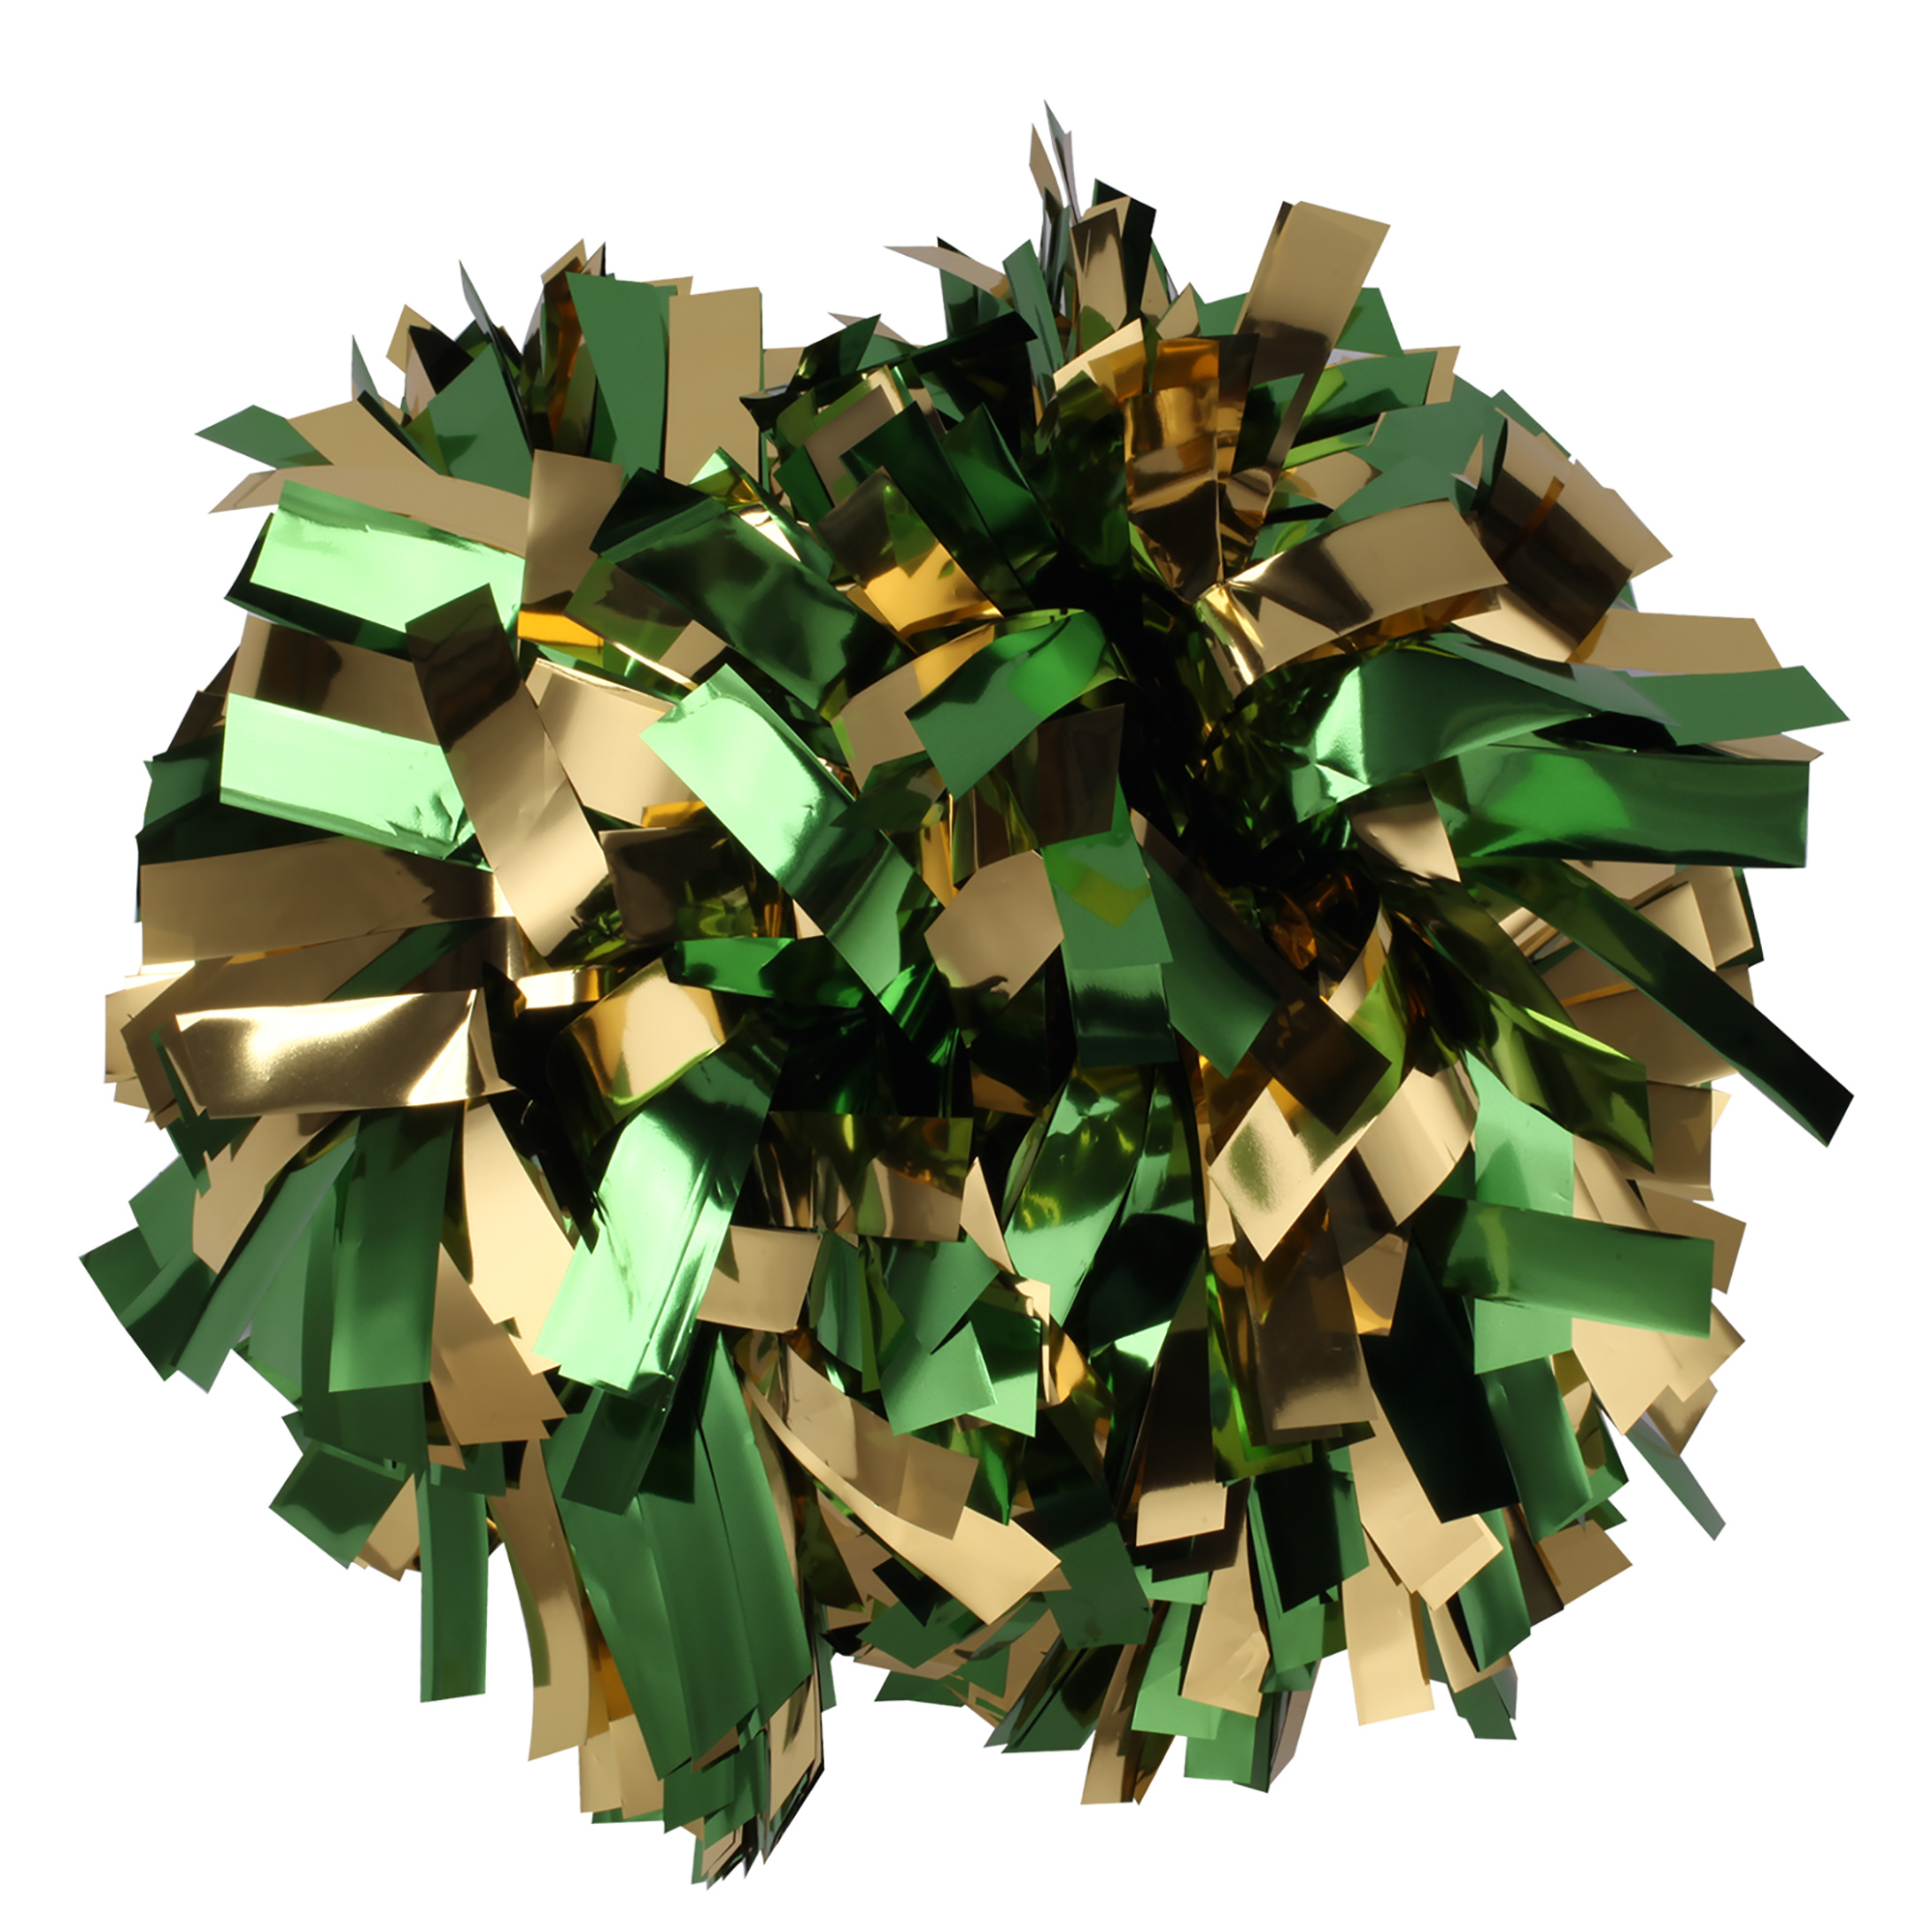 Metallic Cheer Pom Poms Cheerleading Cheerleader Gear 2 Pieces One Pair Poms(Forest Green Gold)